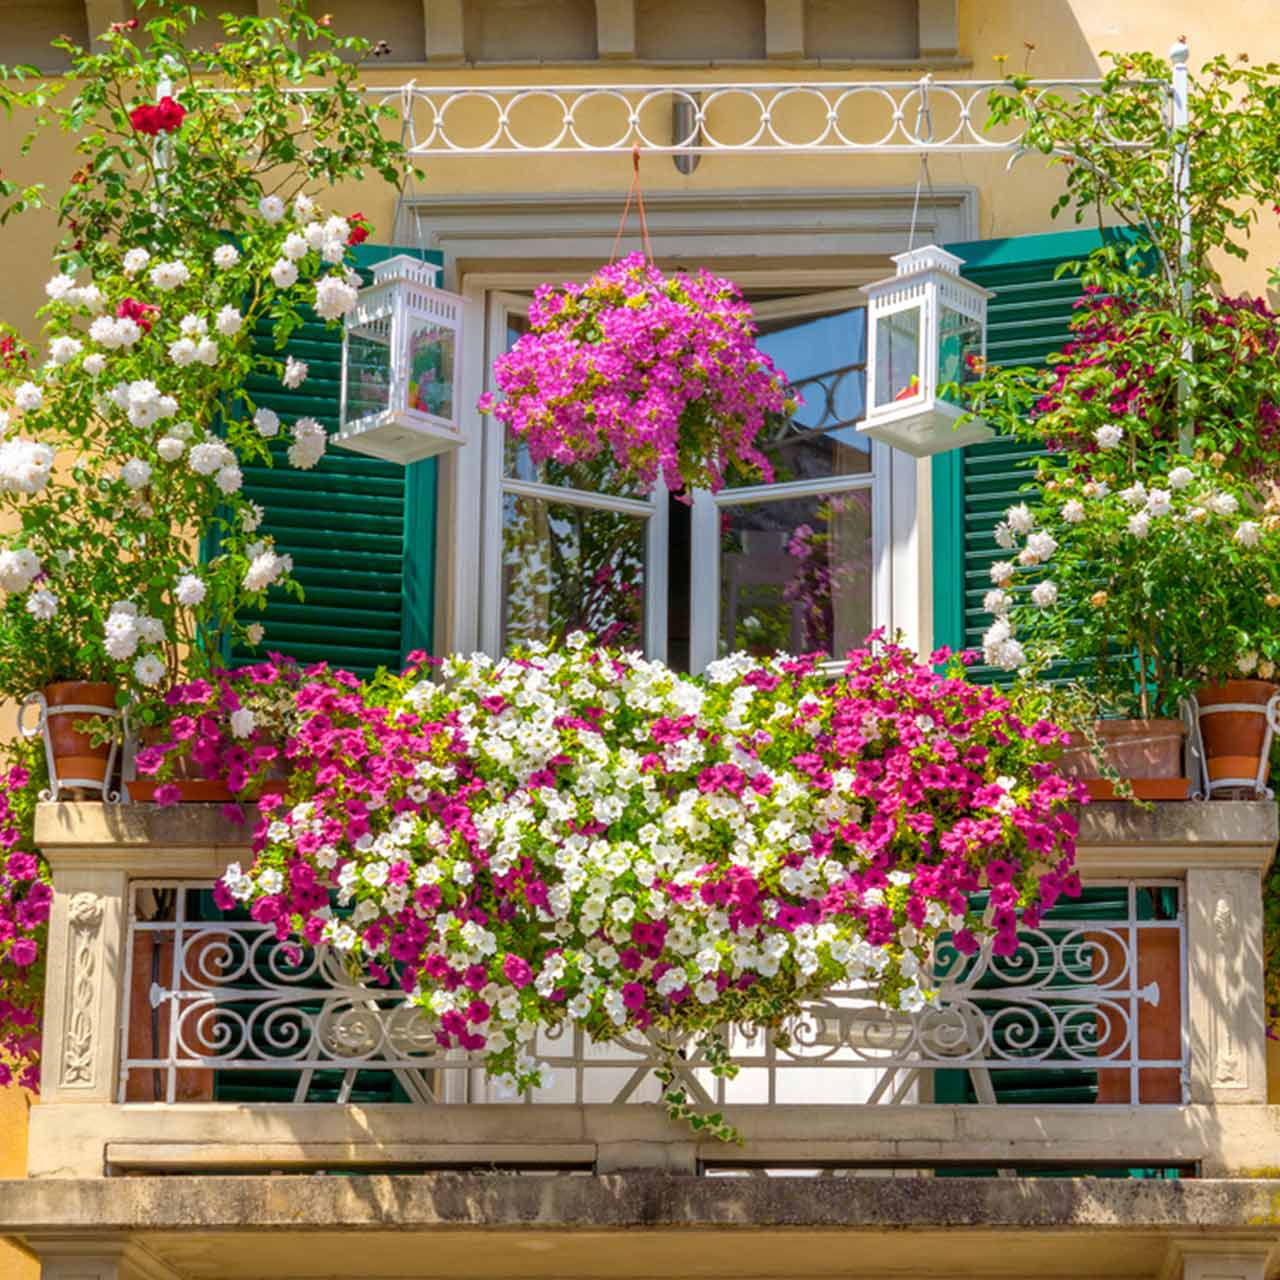 Most Amazing And Beautiful Balcony Garden Ideas